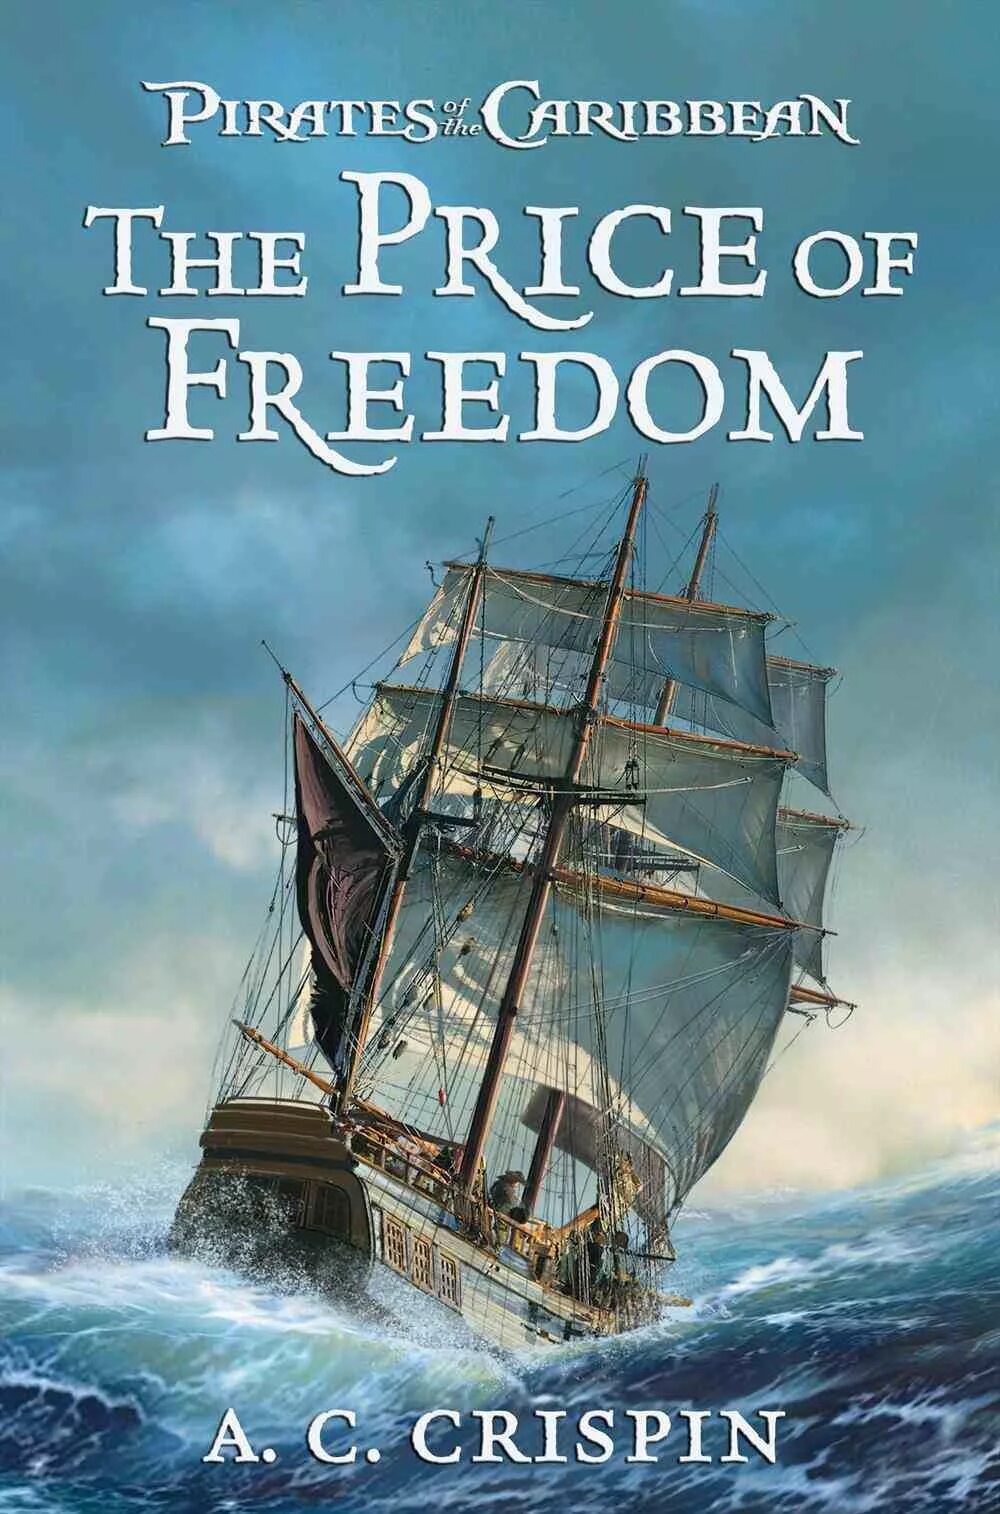 Пираты Карибского моря цена свободы Энн Криспин. Энн Кэрол Криспин. Пираты Карибского моря книга. Книга море.